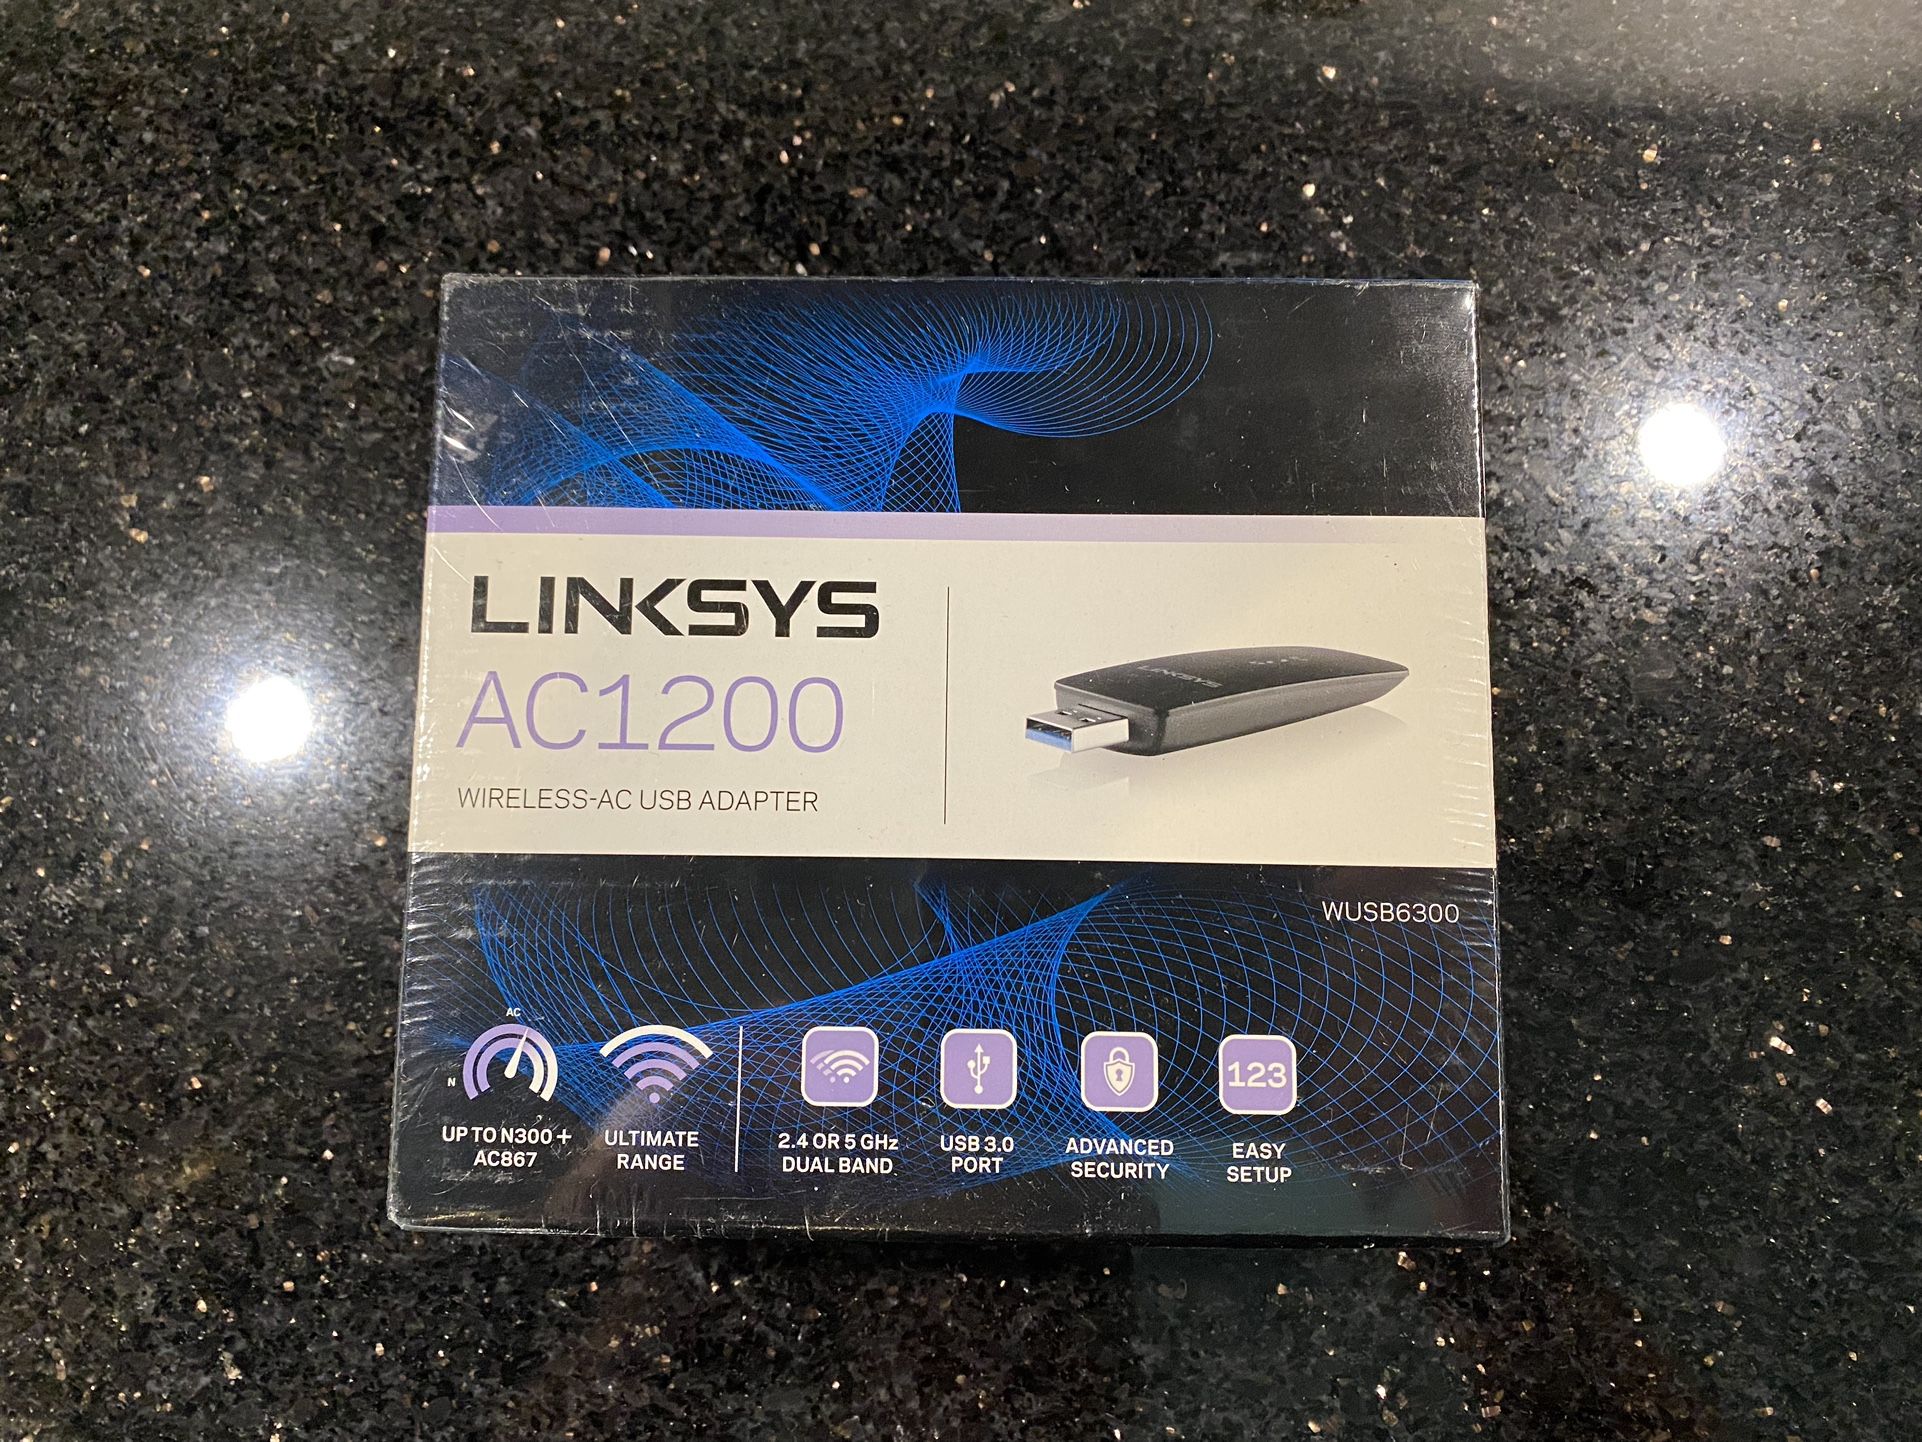 Linksys Dual Band Wireless-AC USB Adapter AC1200 NEW